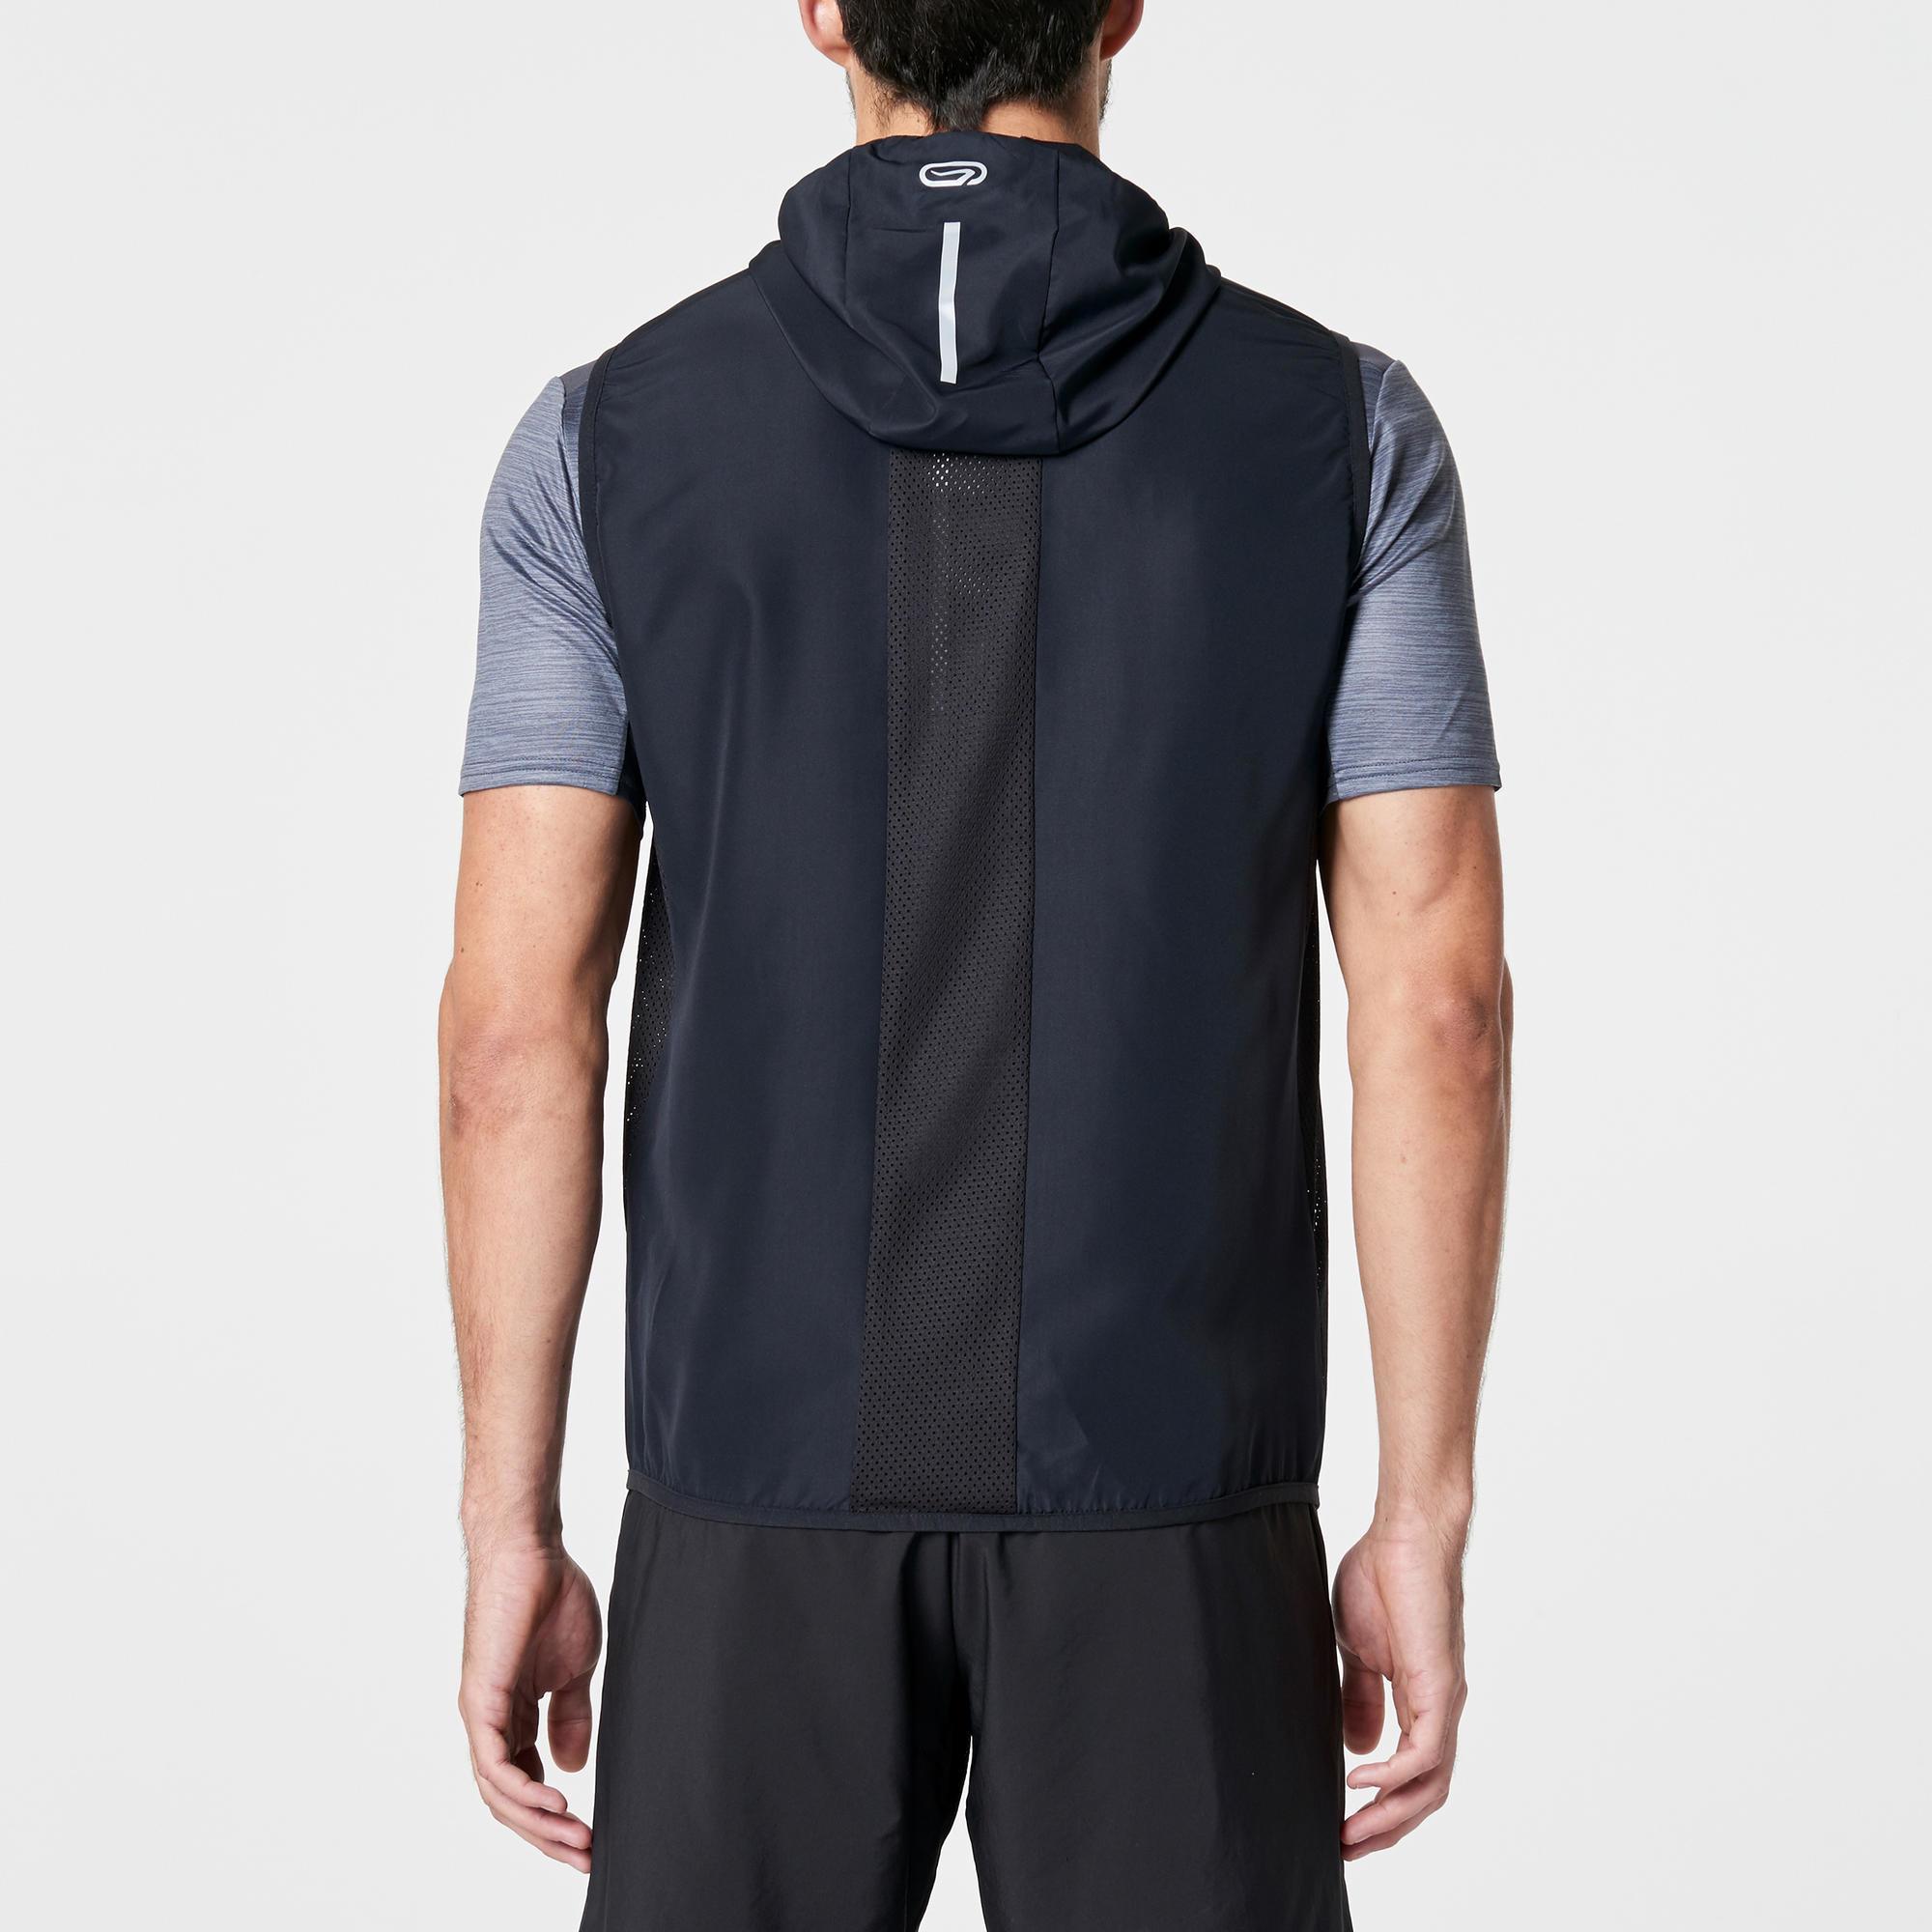 decathlon sleeveless jackets